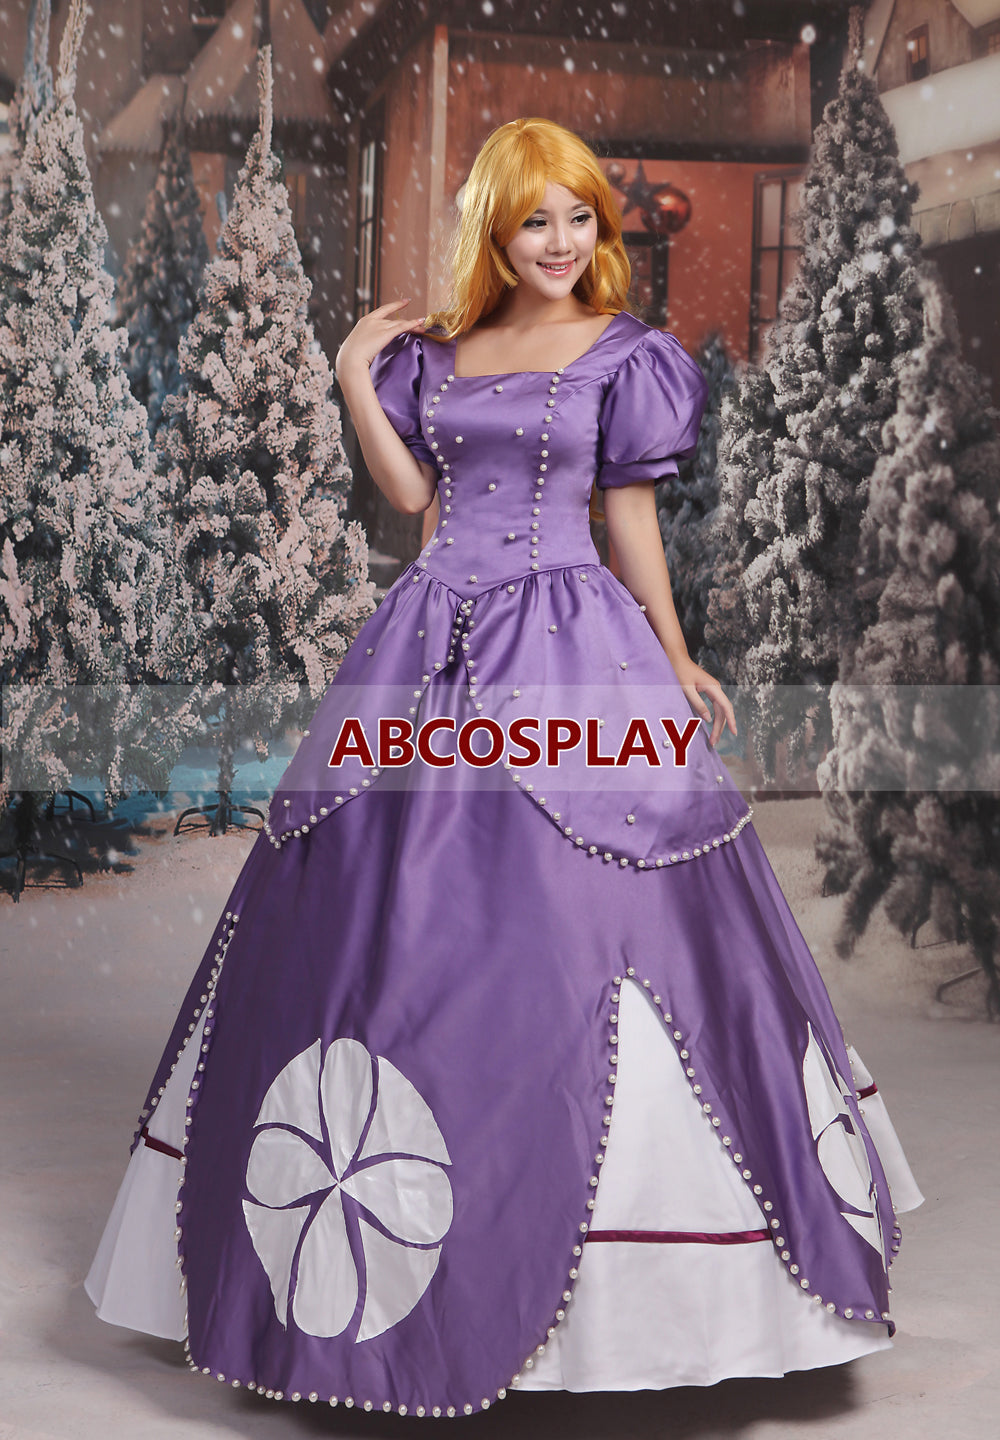 Sofia The First Princess Purple Dress Cosplay Costume